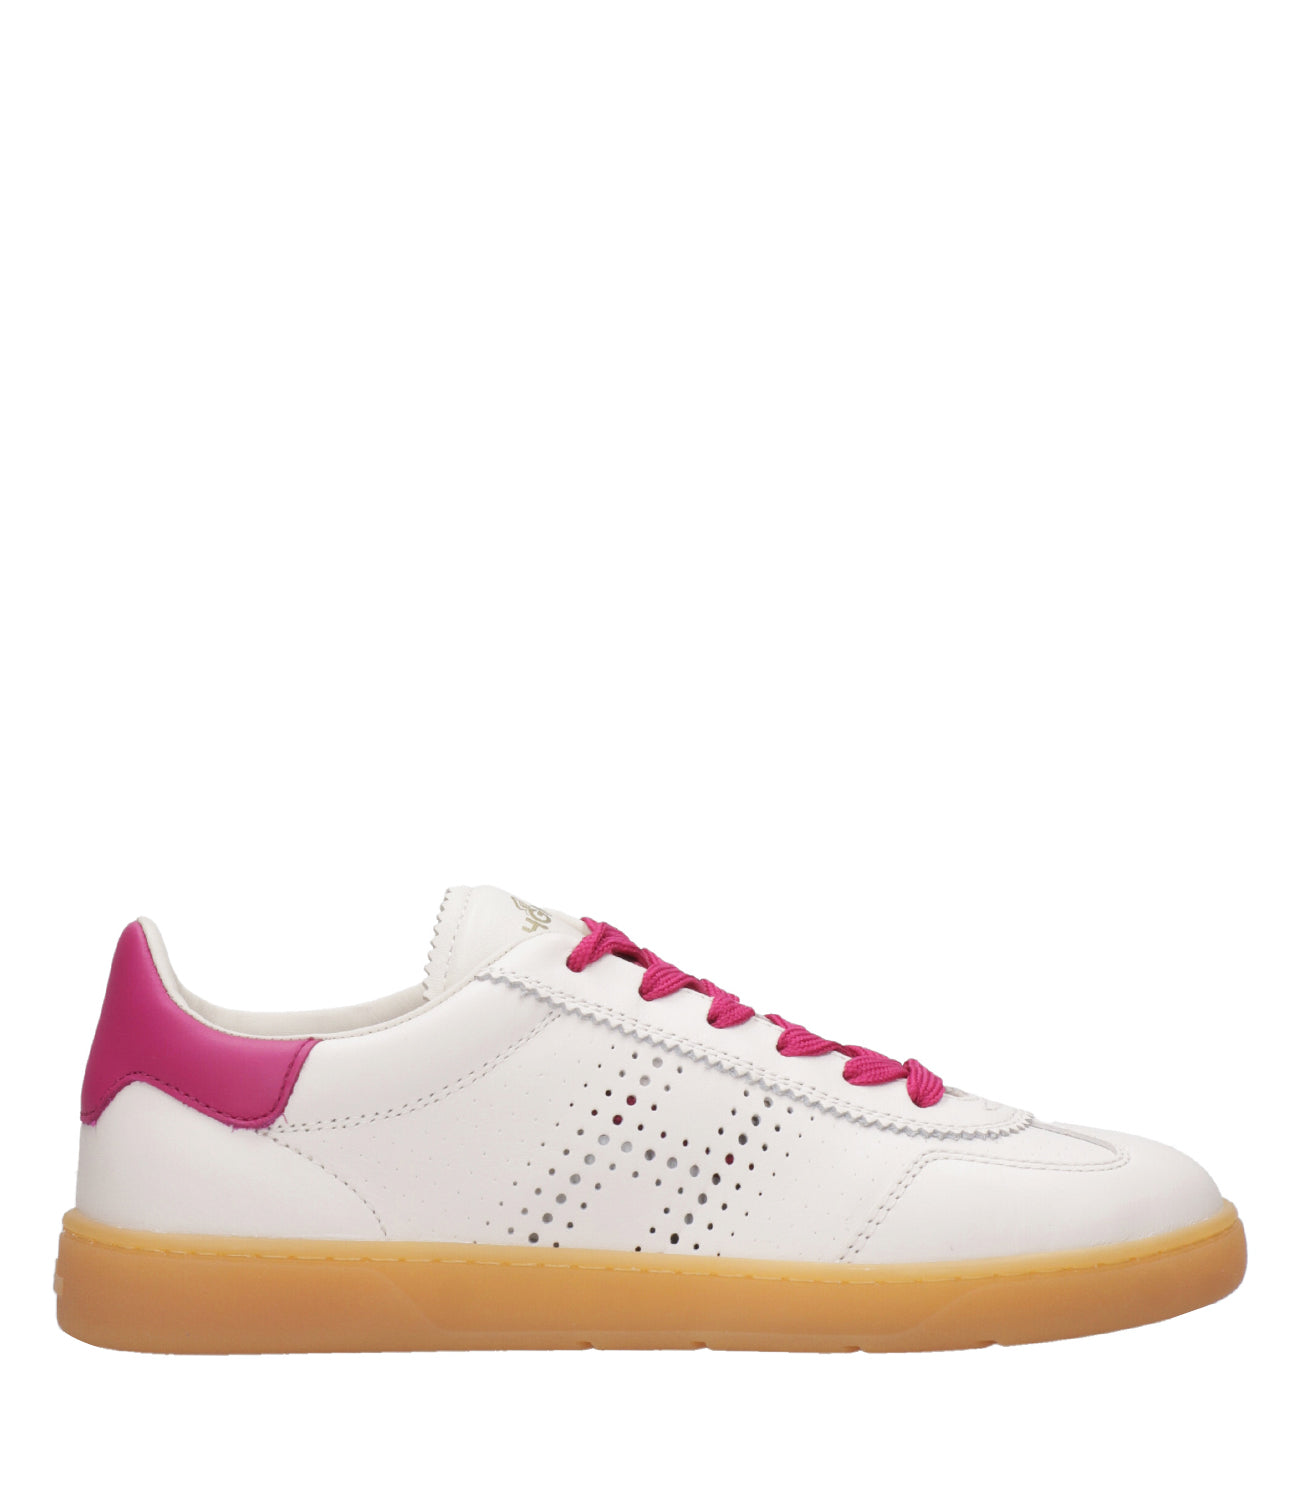 Hogan | Cool Sneakers White and Fuxia